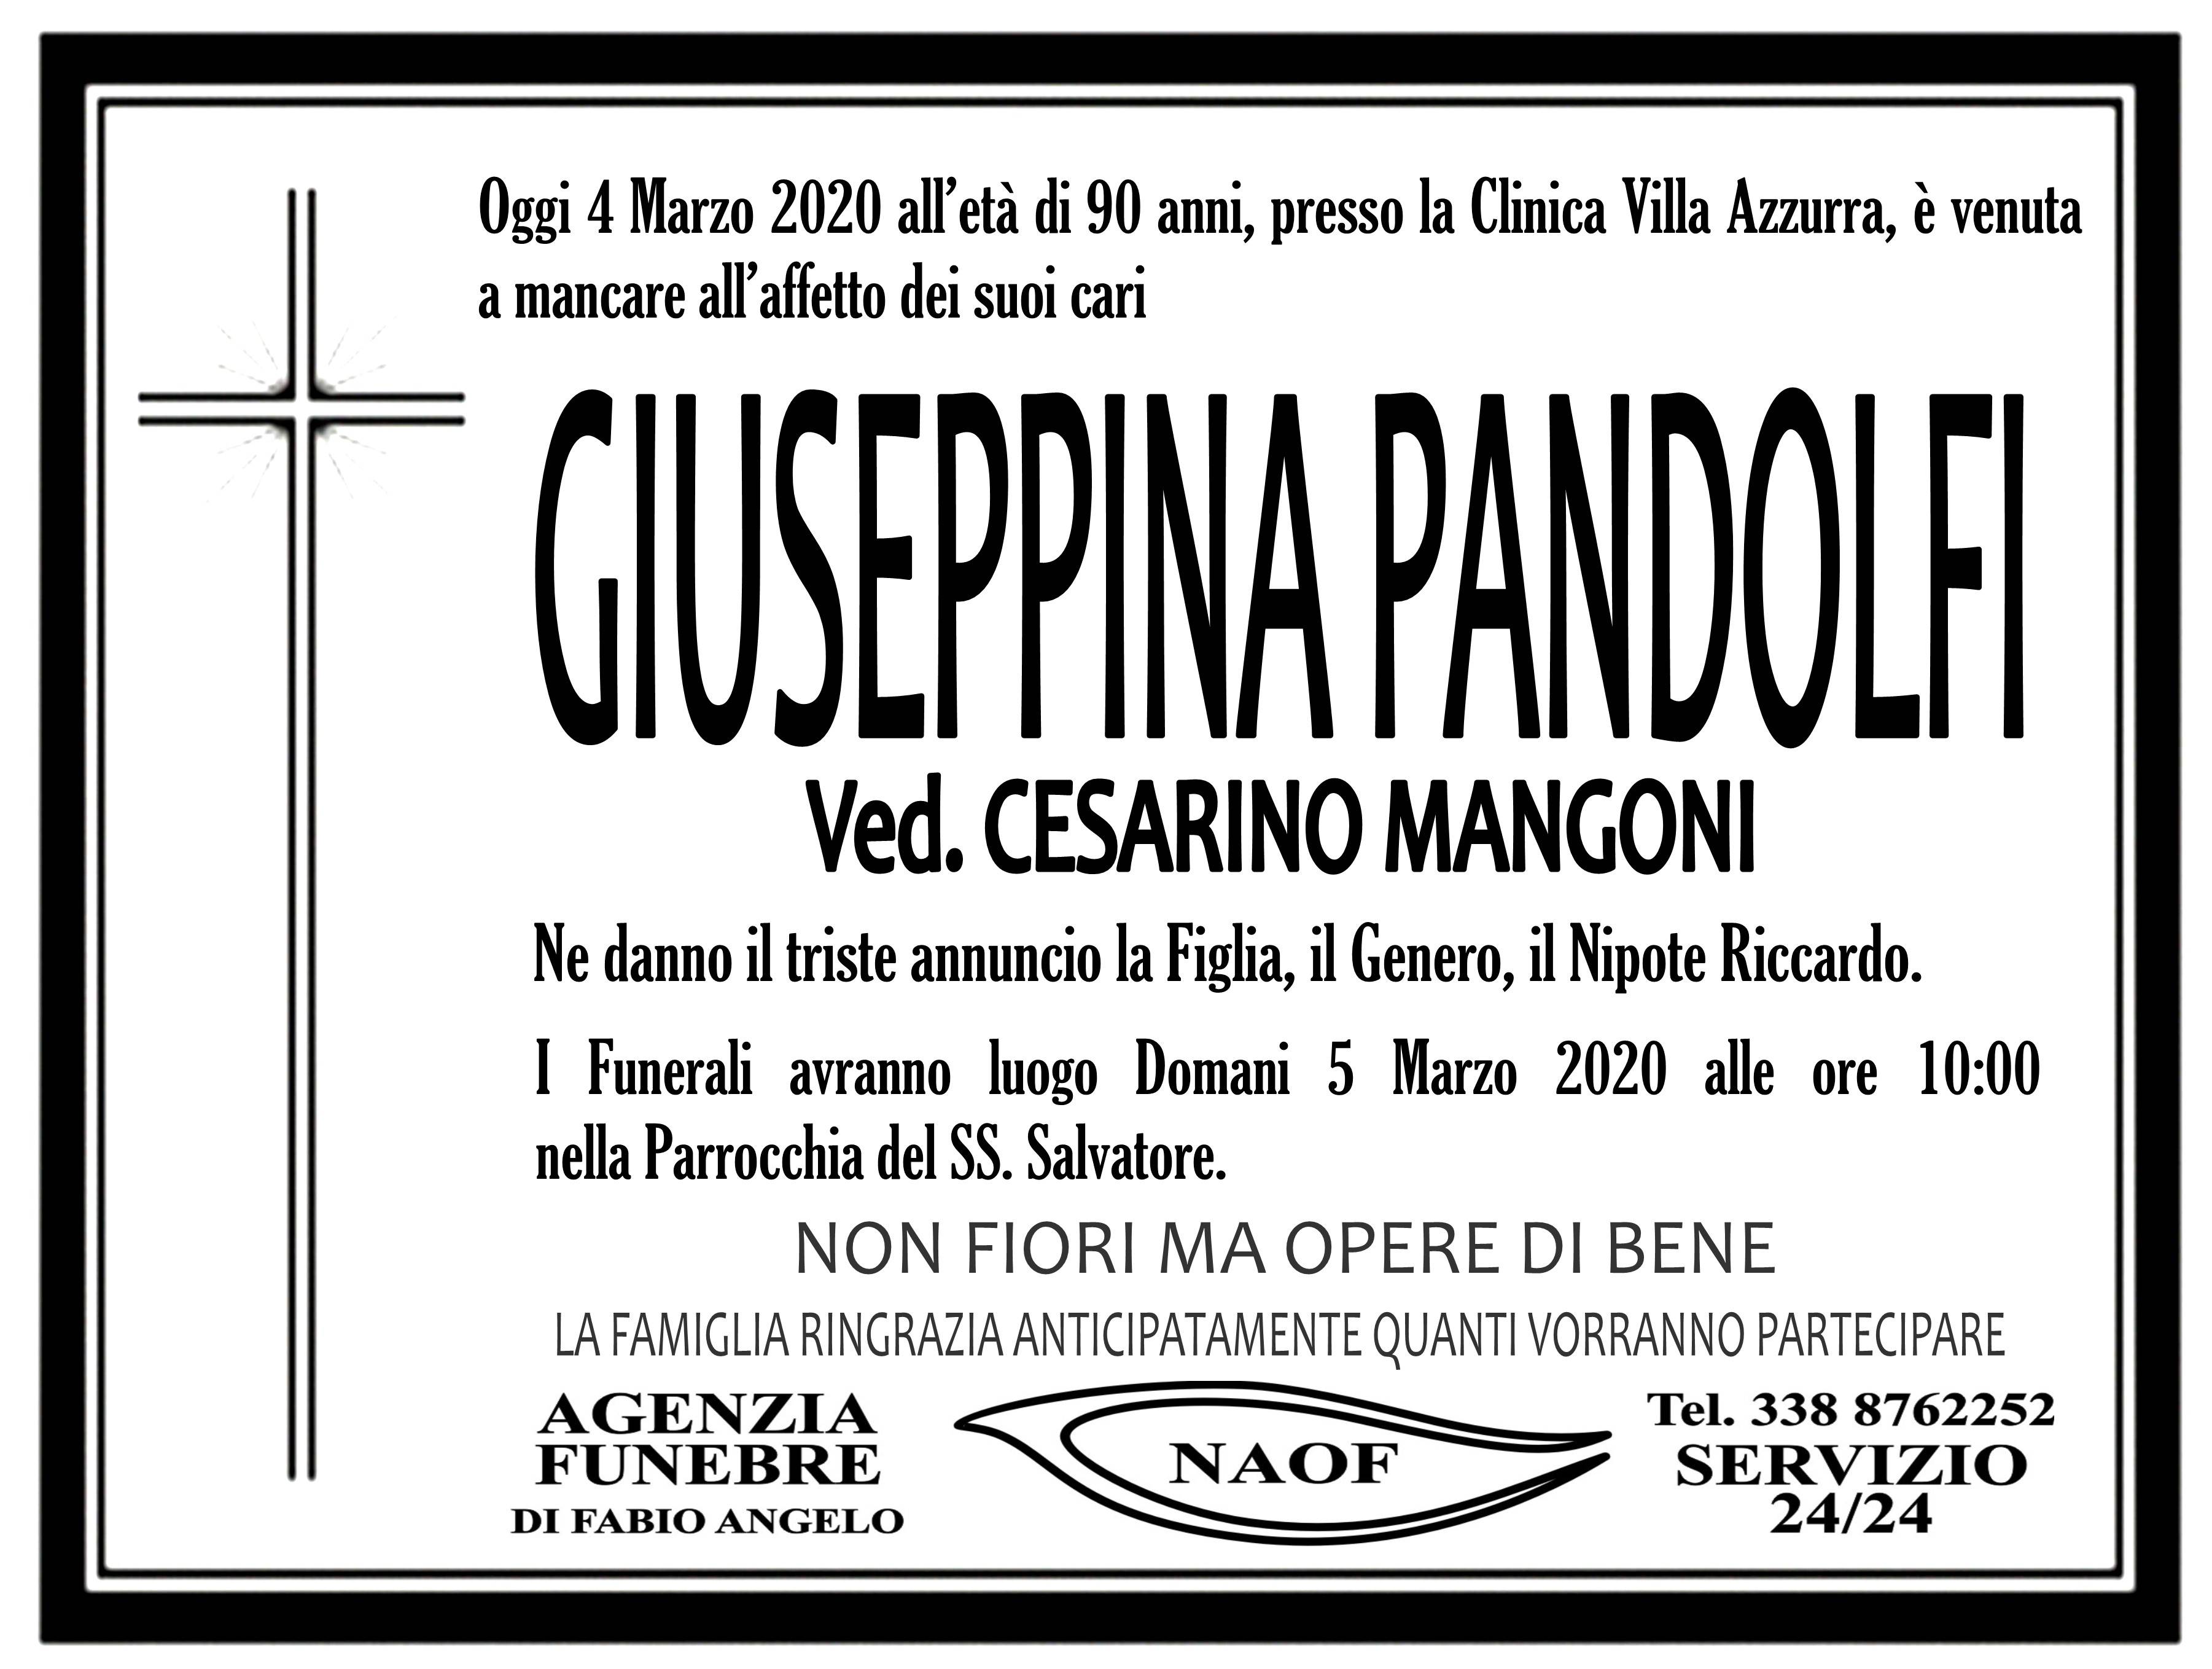 Giuseppina Pandolfi